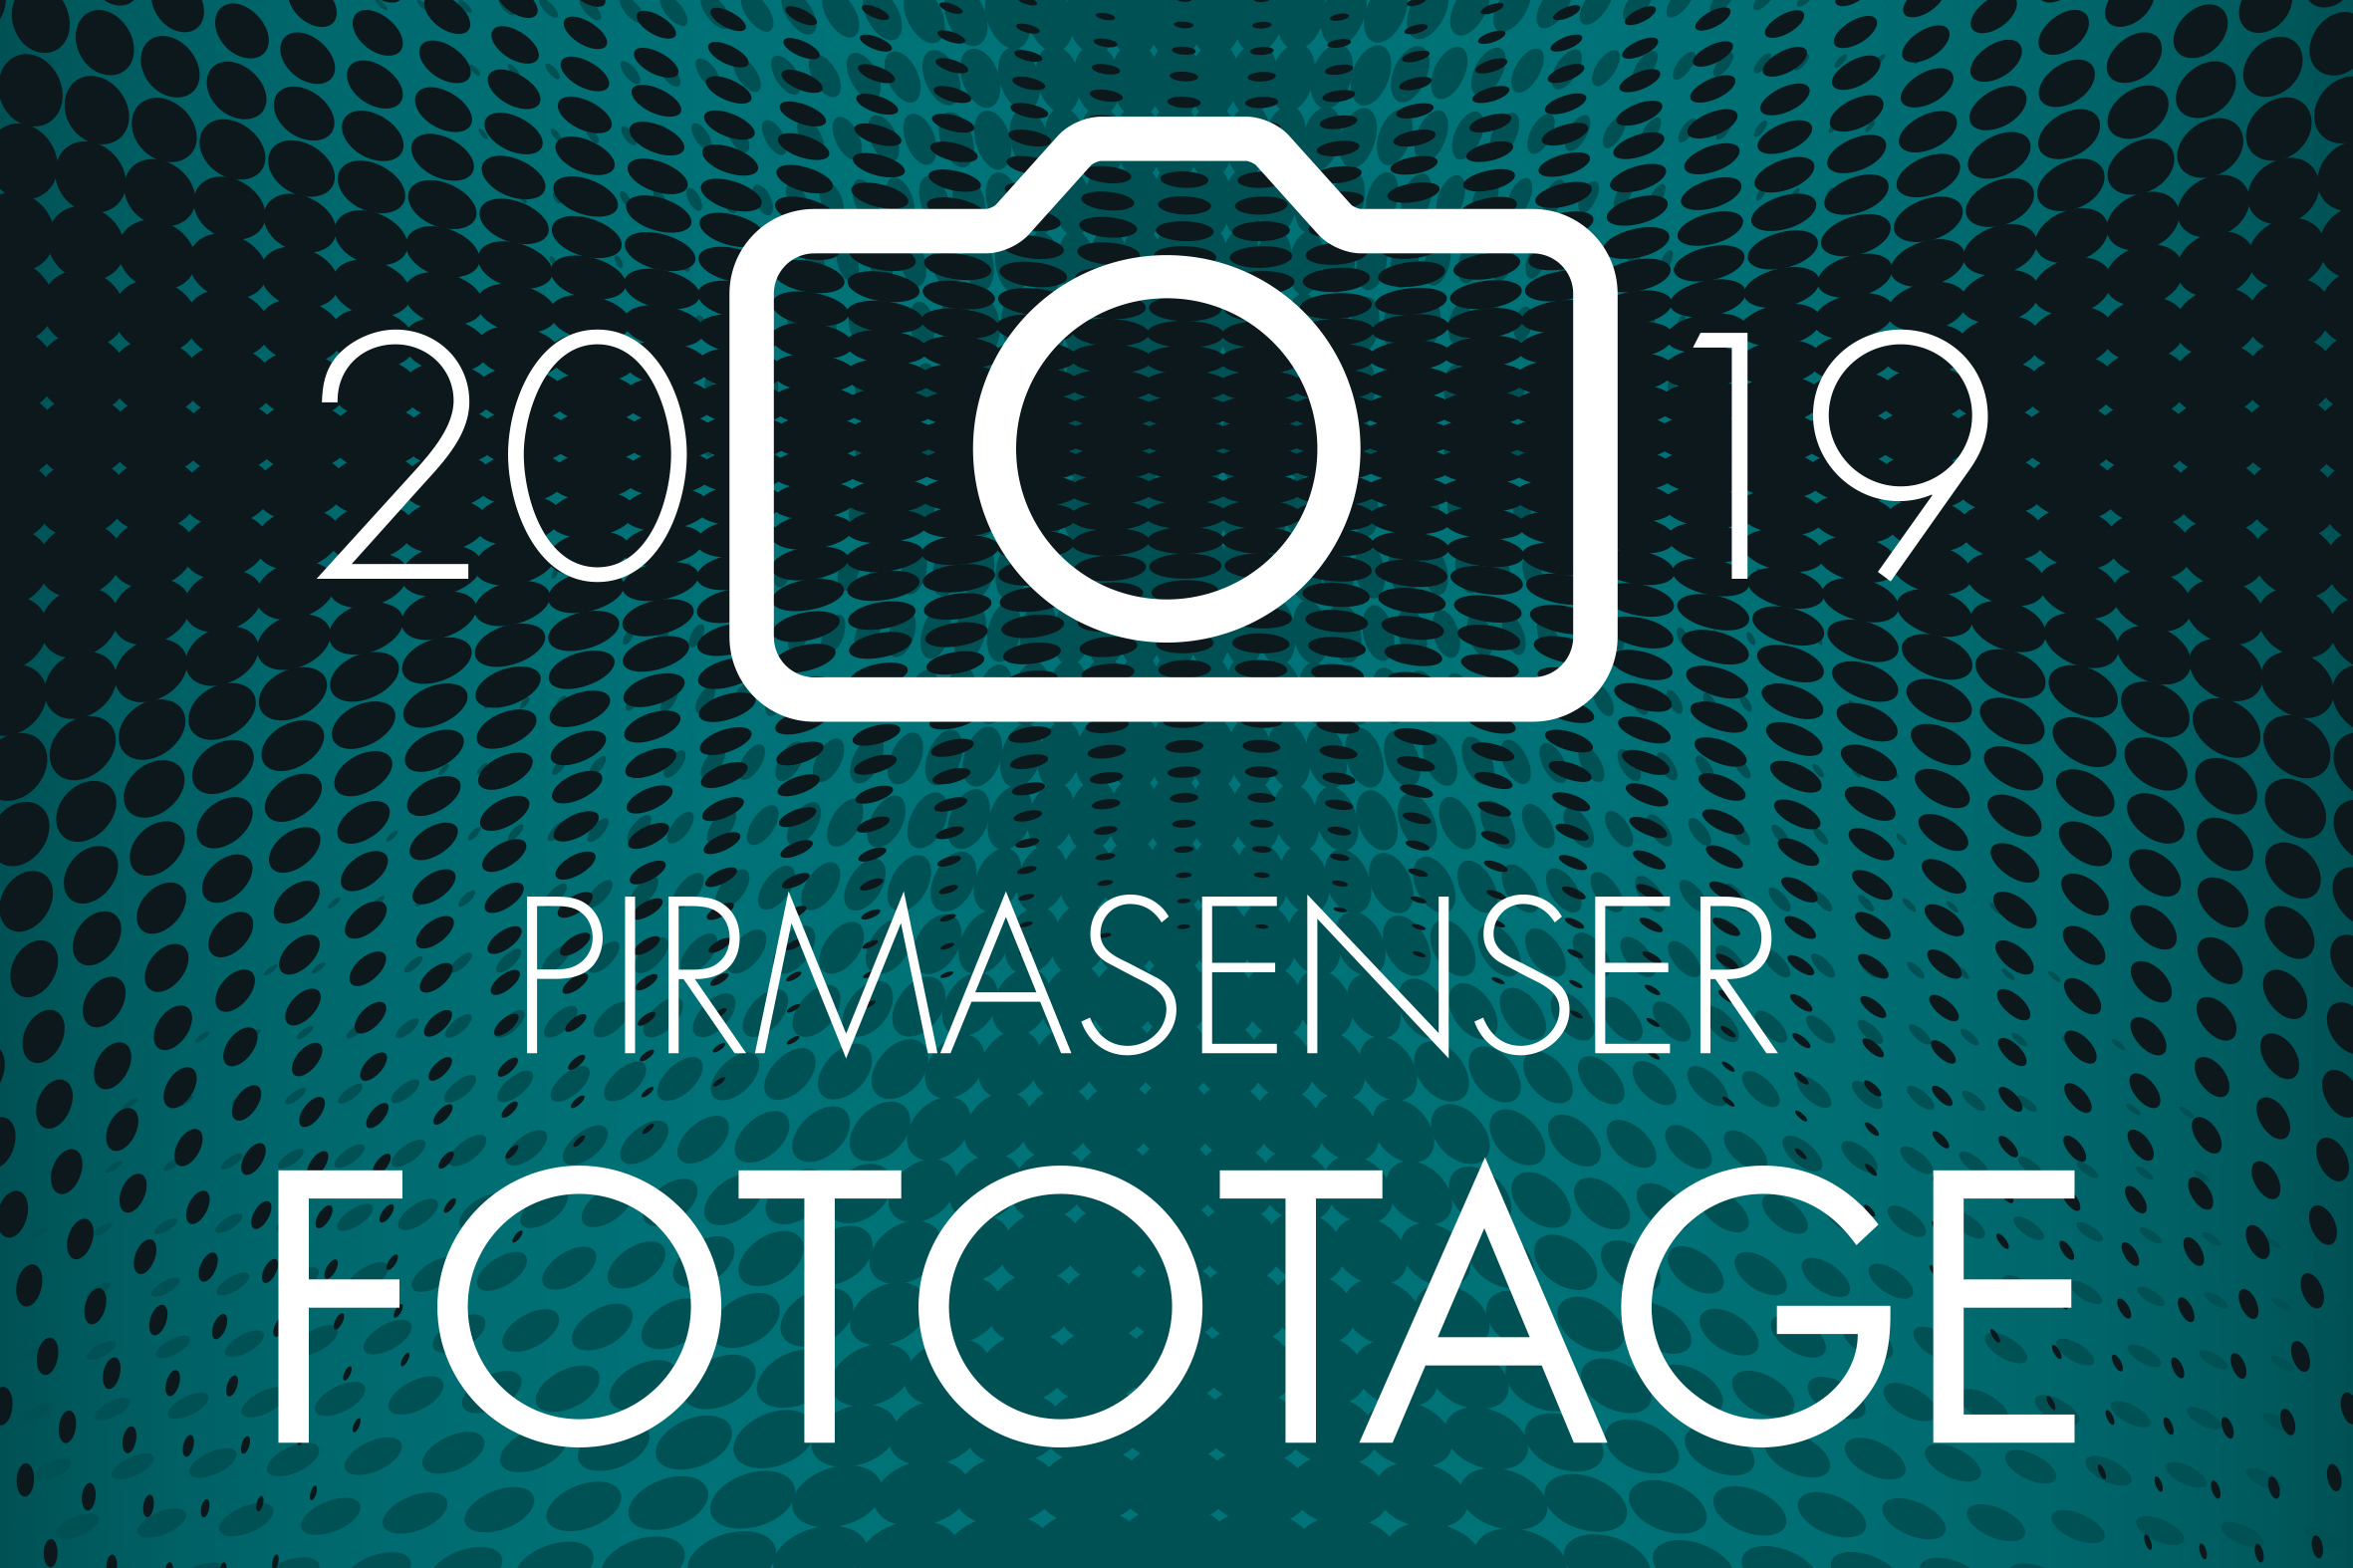 Pirmasenser Fototage 2019